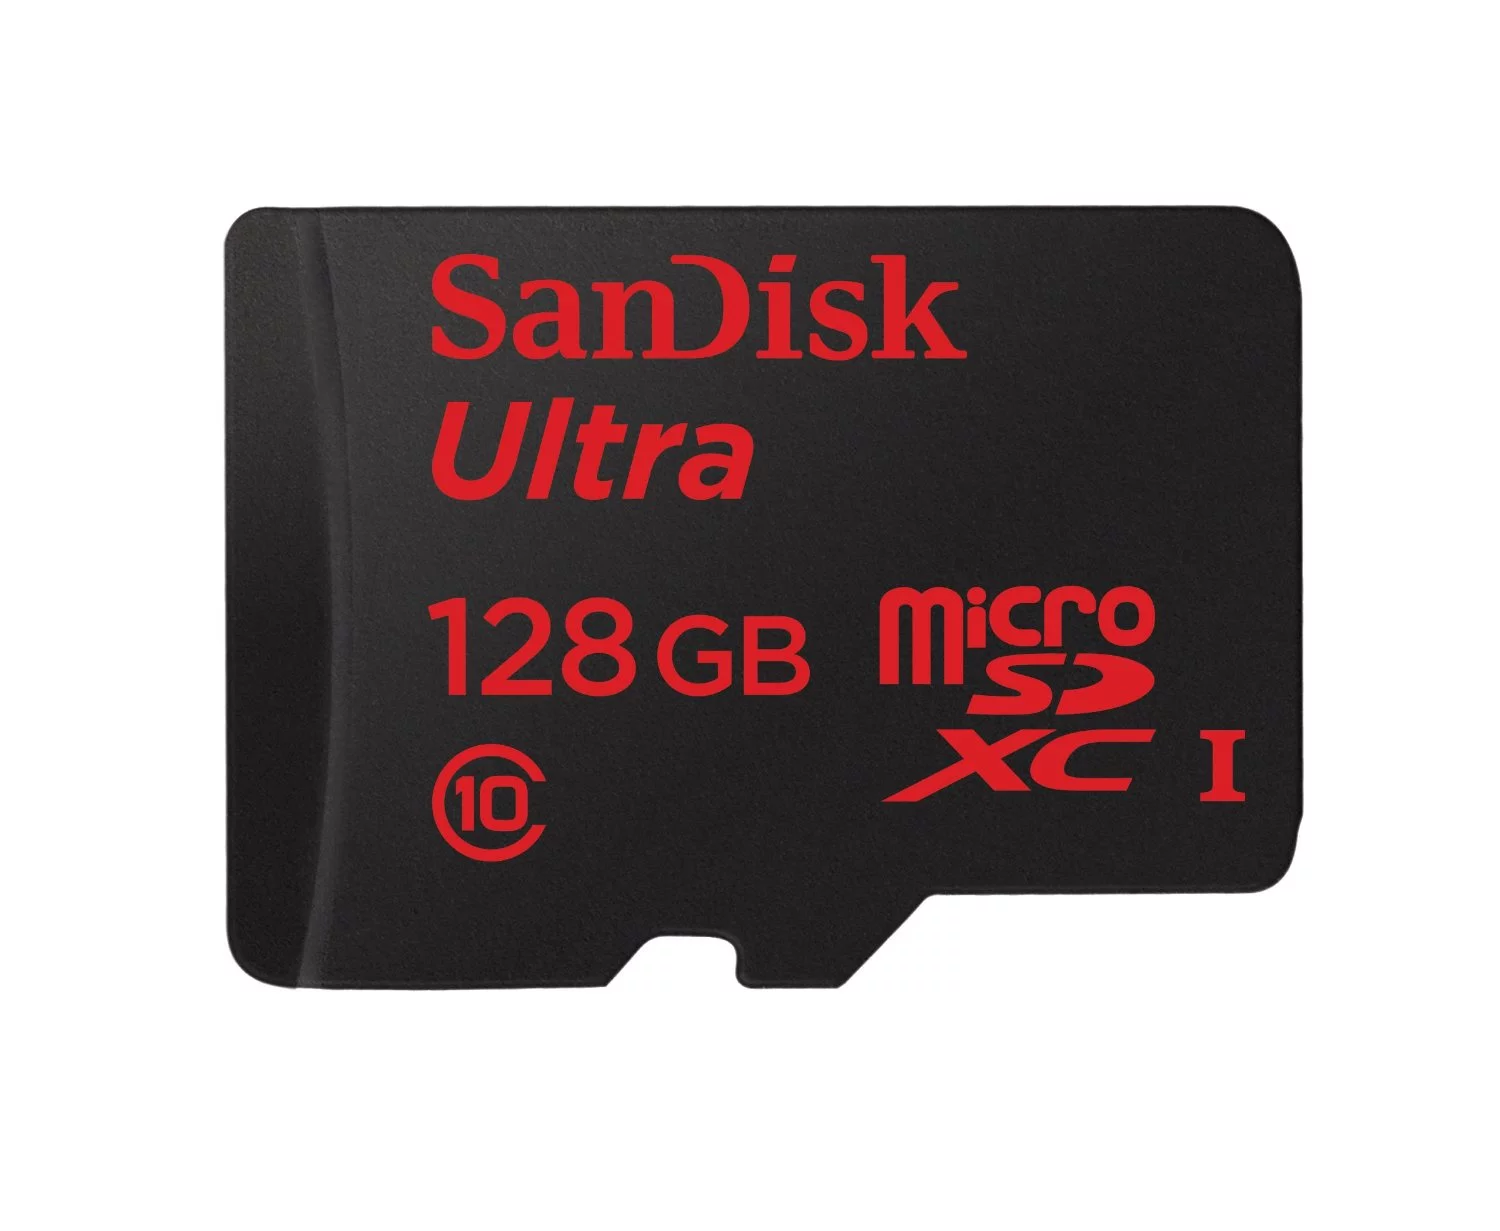 Sandisk 128GB card